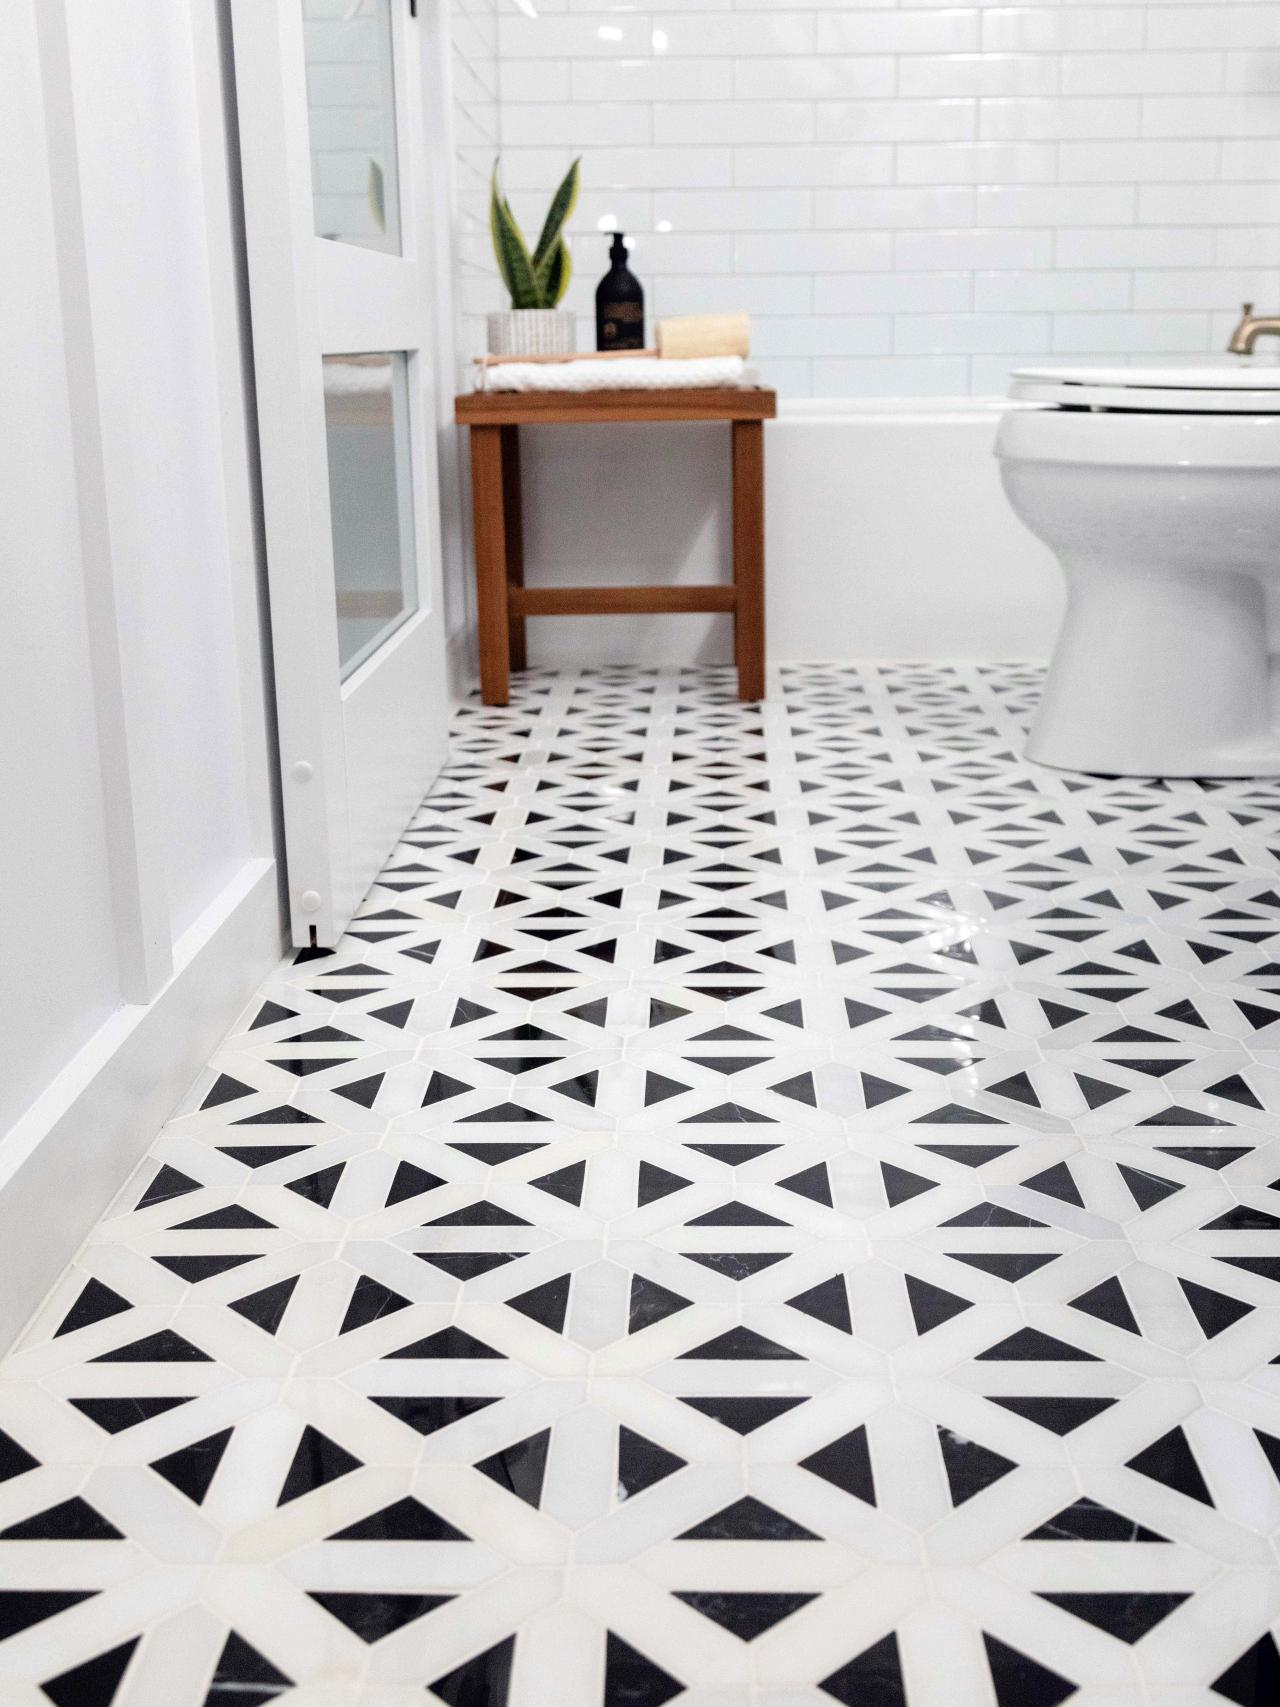 How To Lay A Tile Floor, Tiling Bathroom Floor Diy